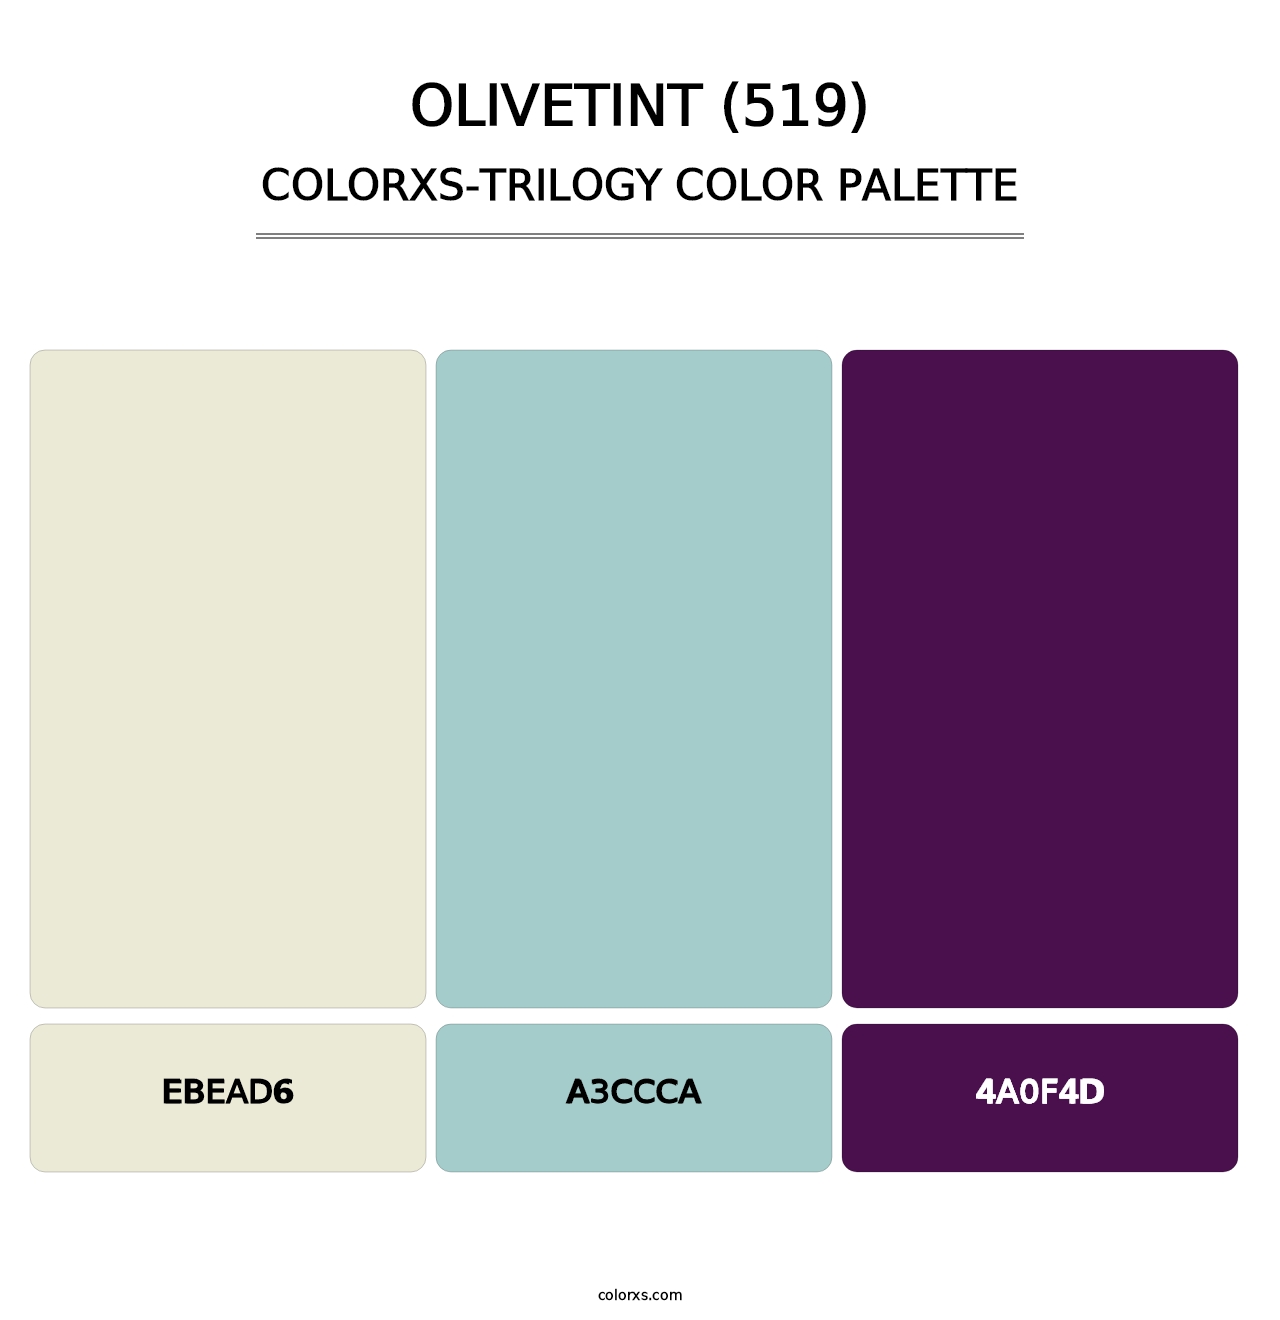 Olivetint (519) - Colorxs Trilogy Palette